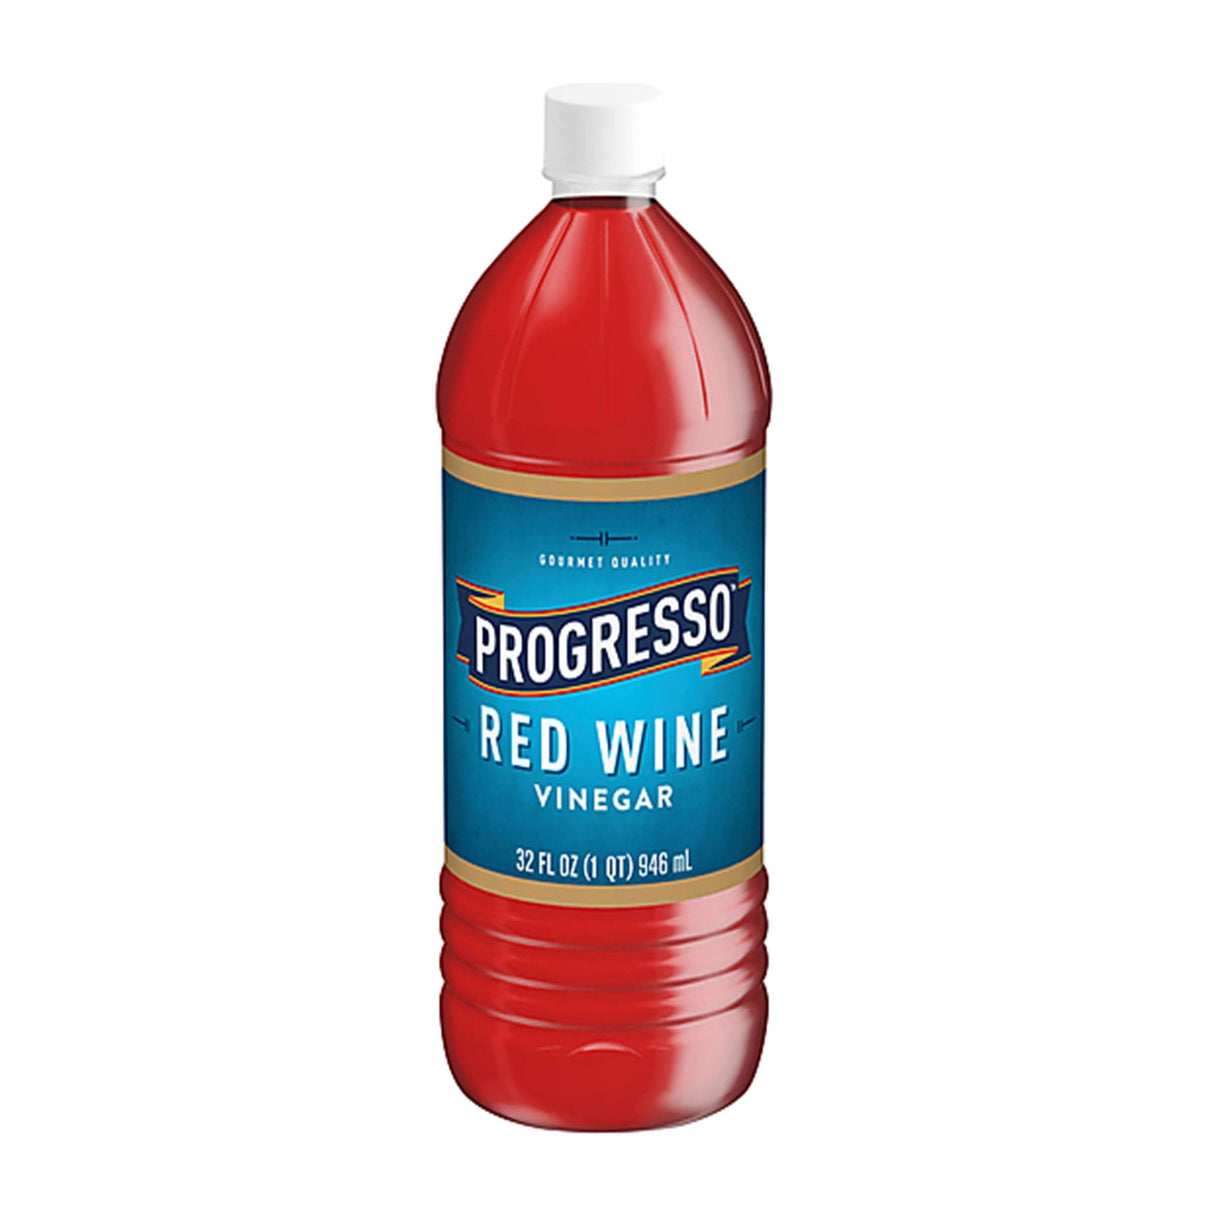 Progresso Red Wine Vinegar